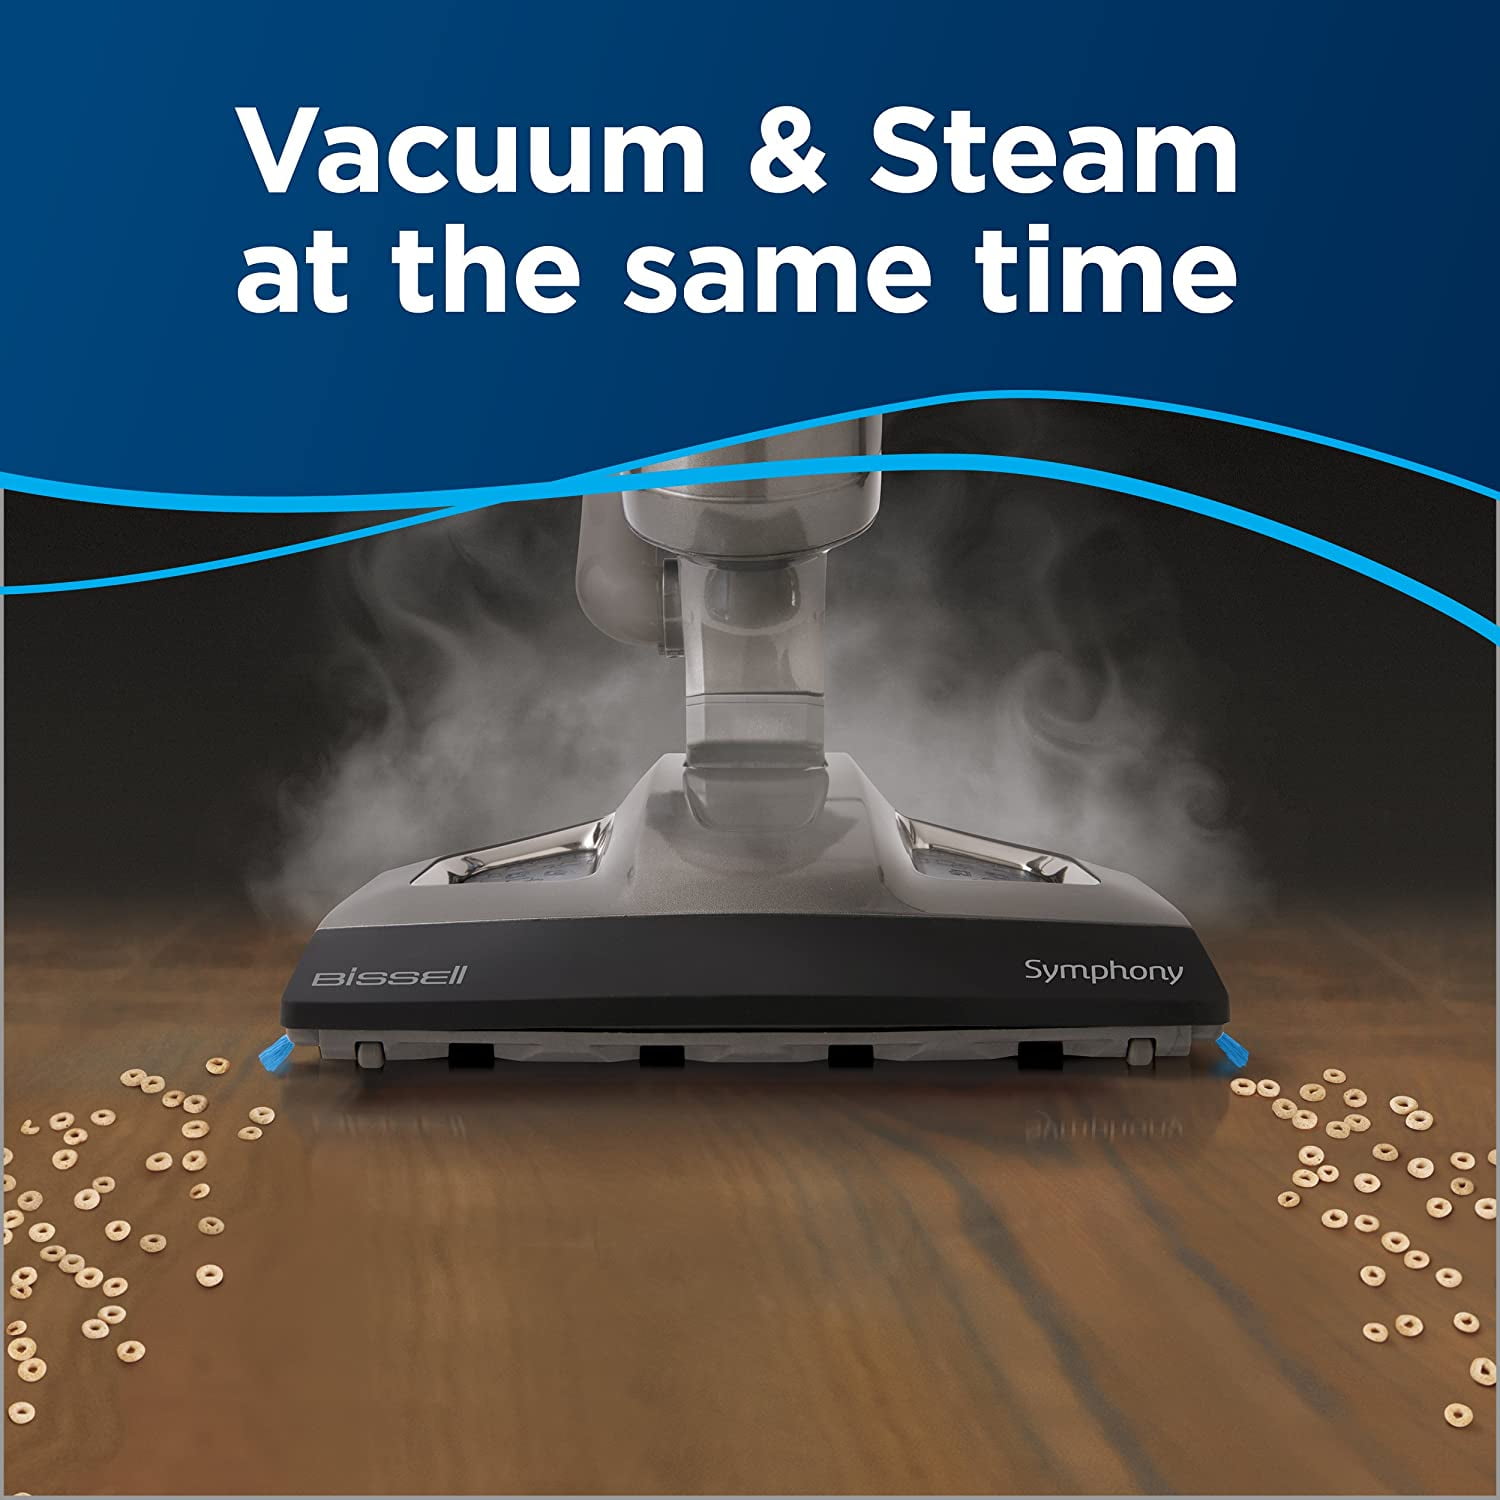 Pre vacuum steam фото 116